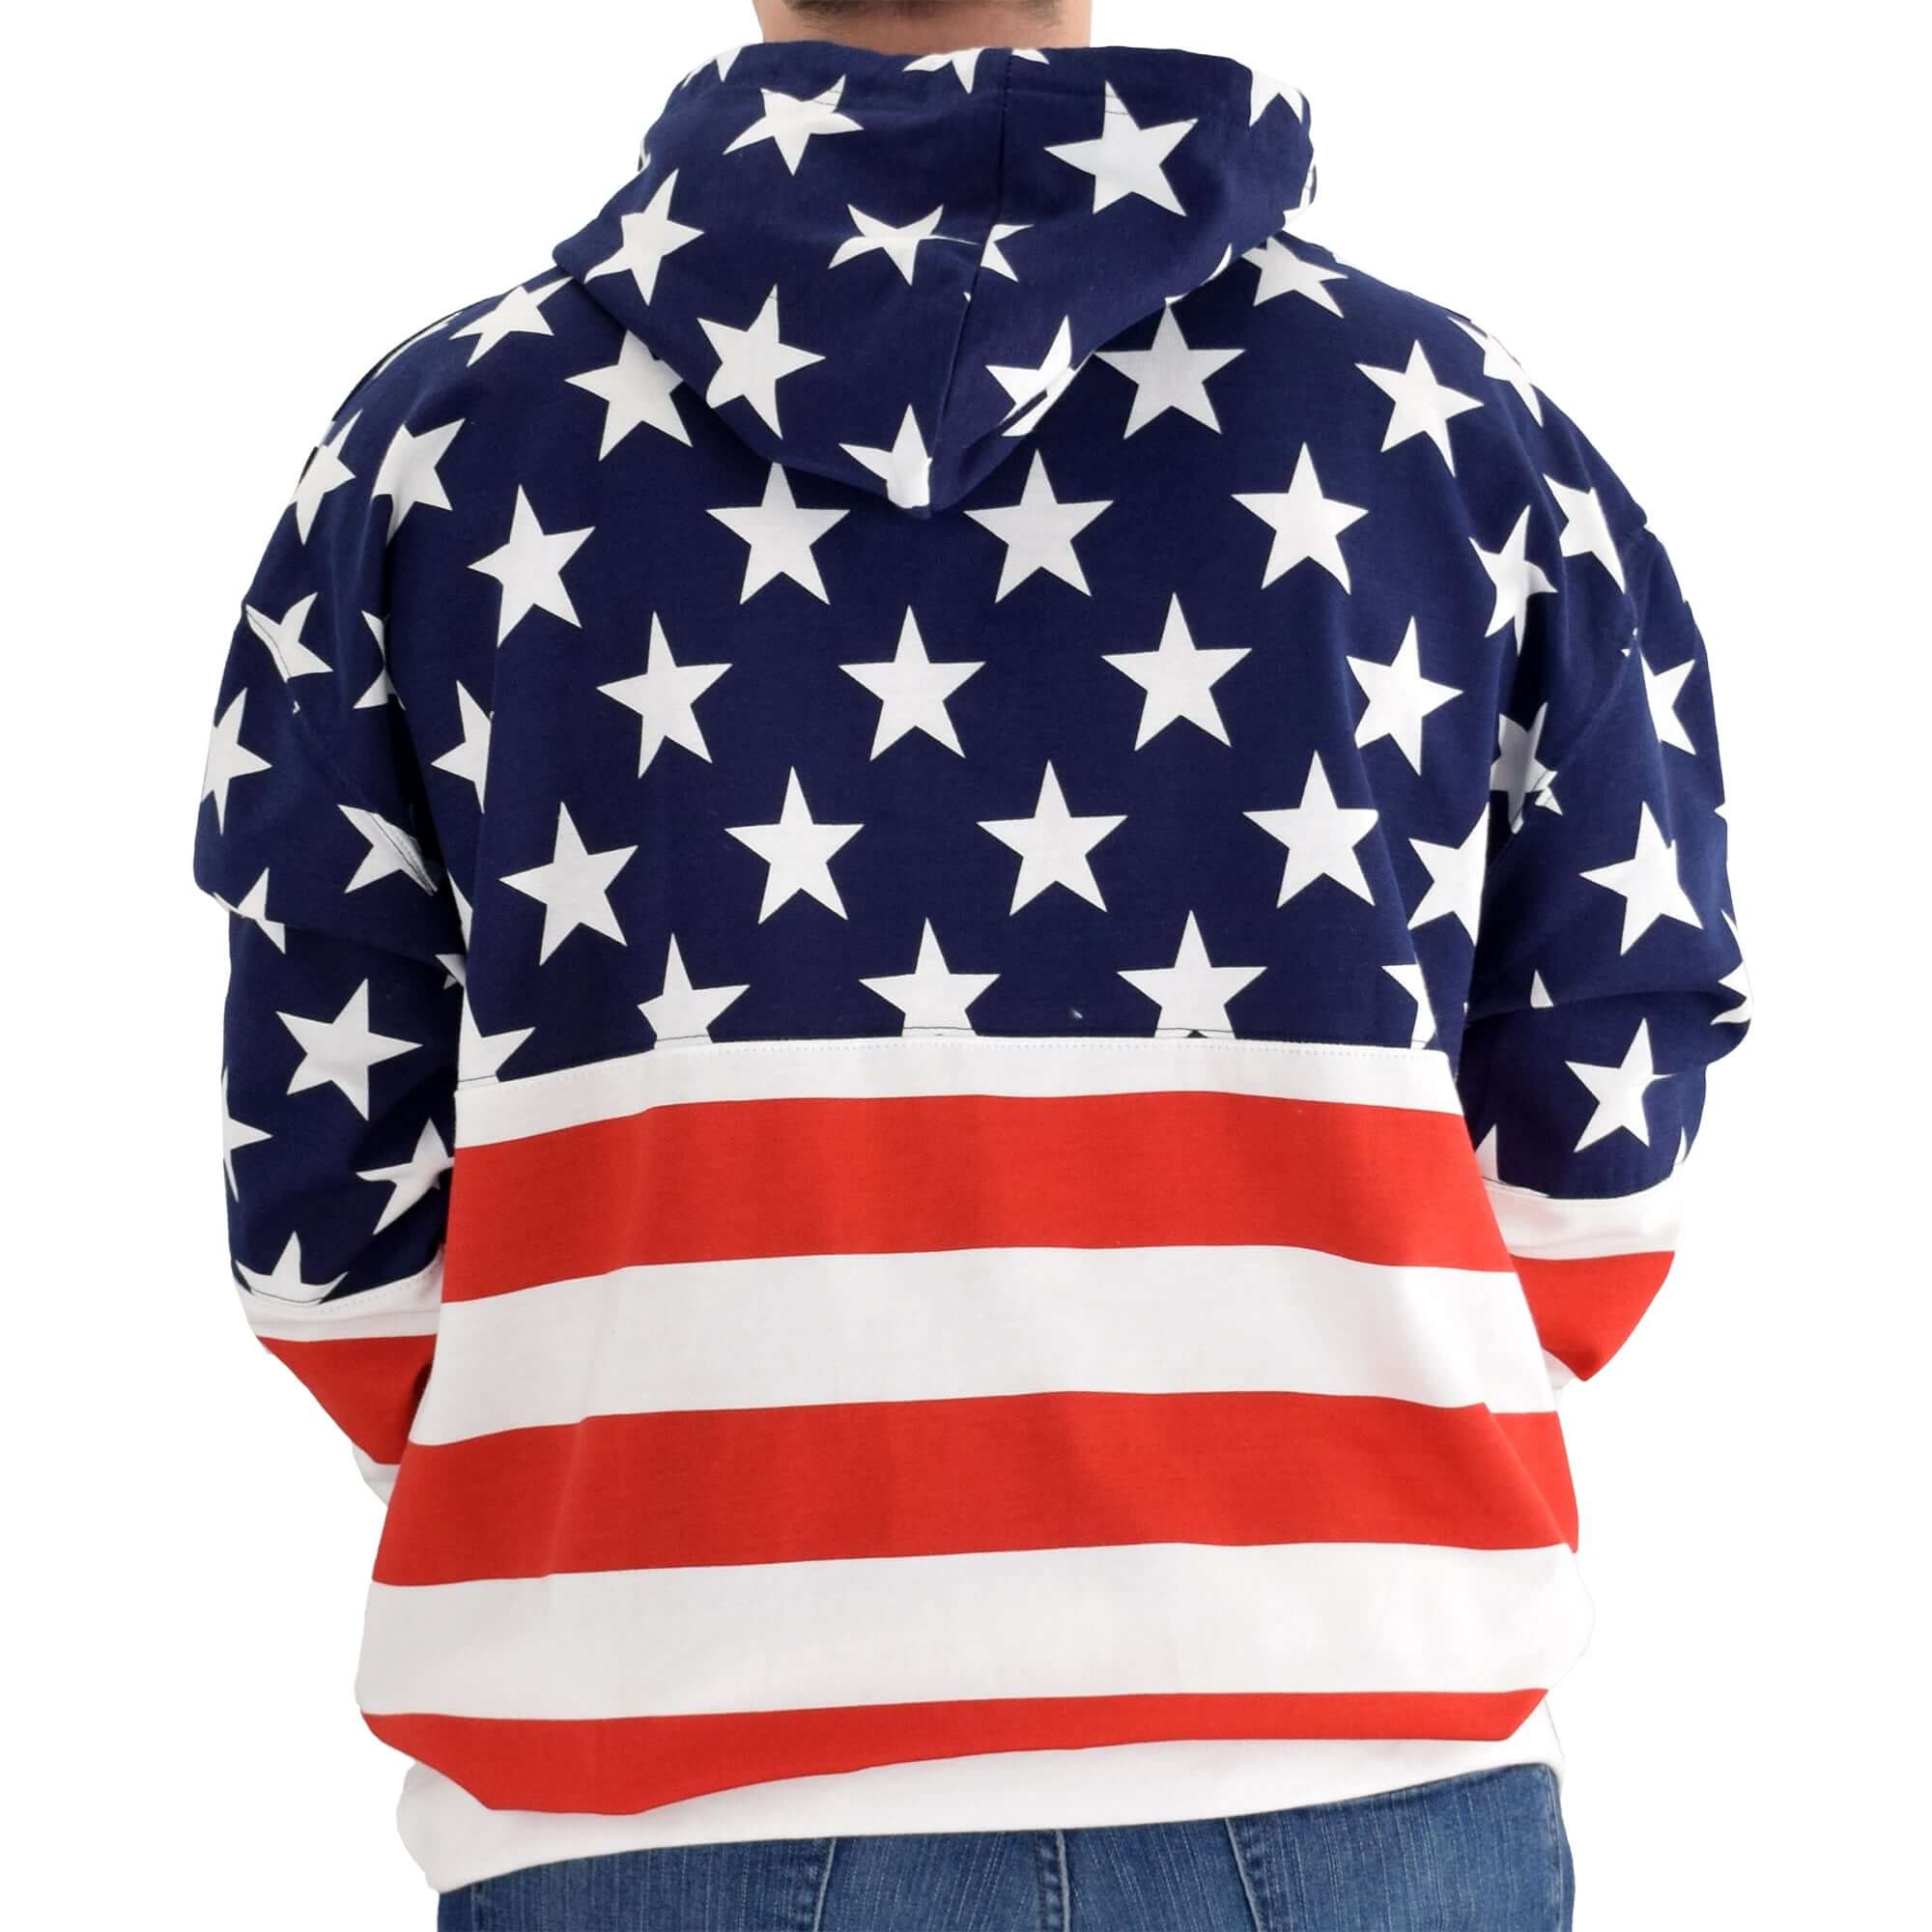 mens patriotic stars navy hoodie sweater - the flag shirt